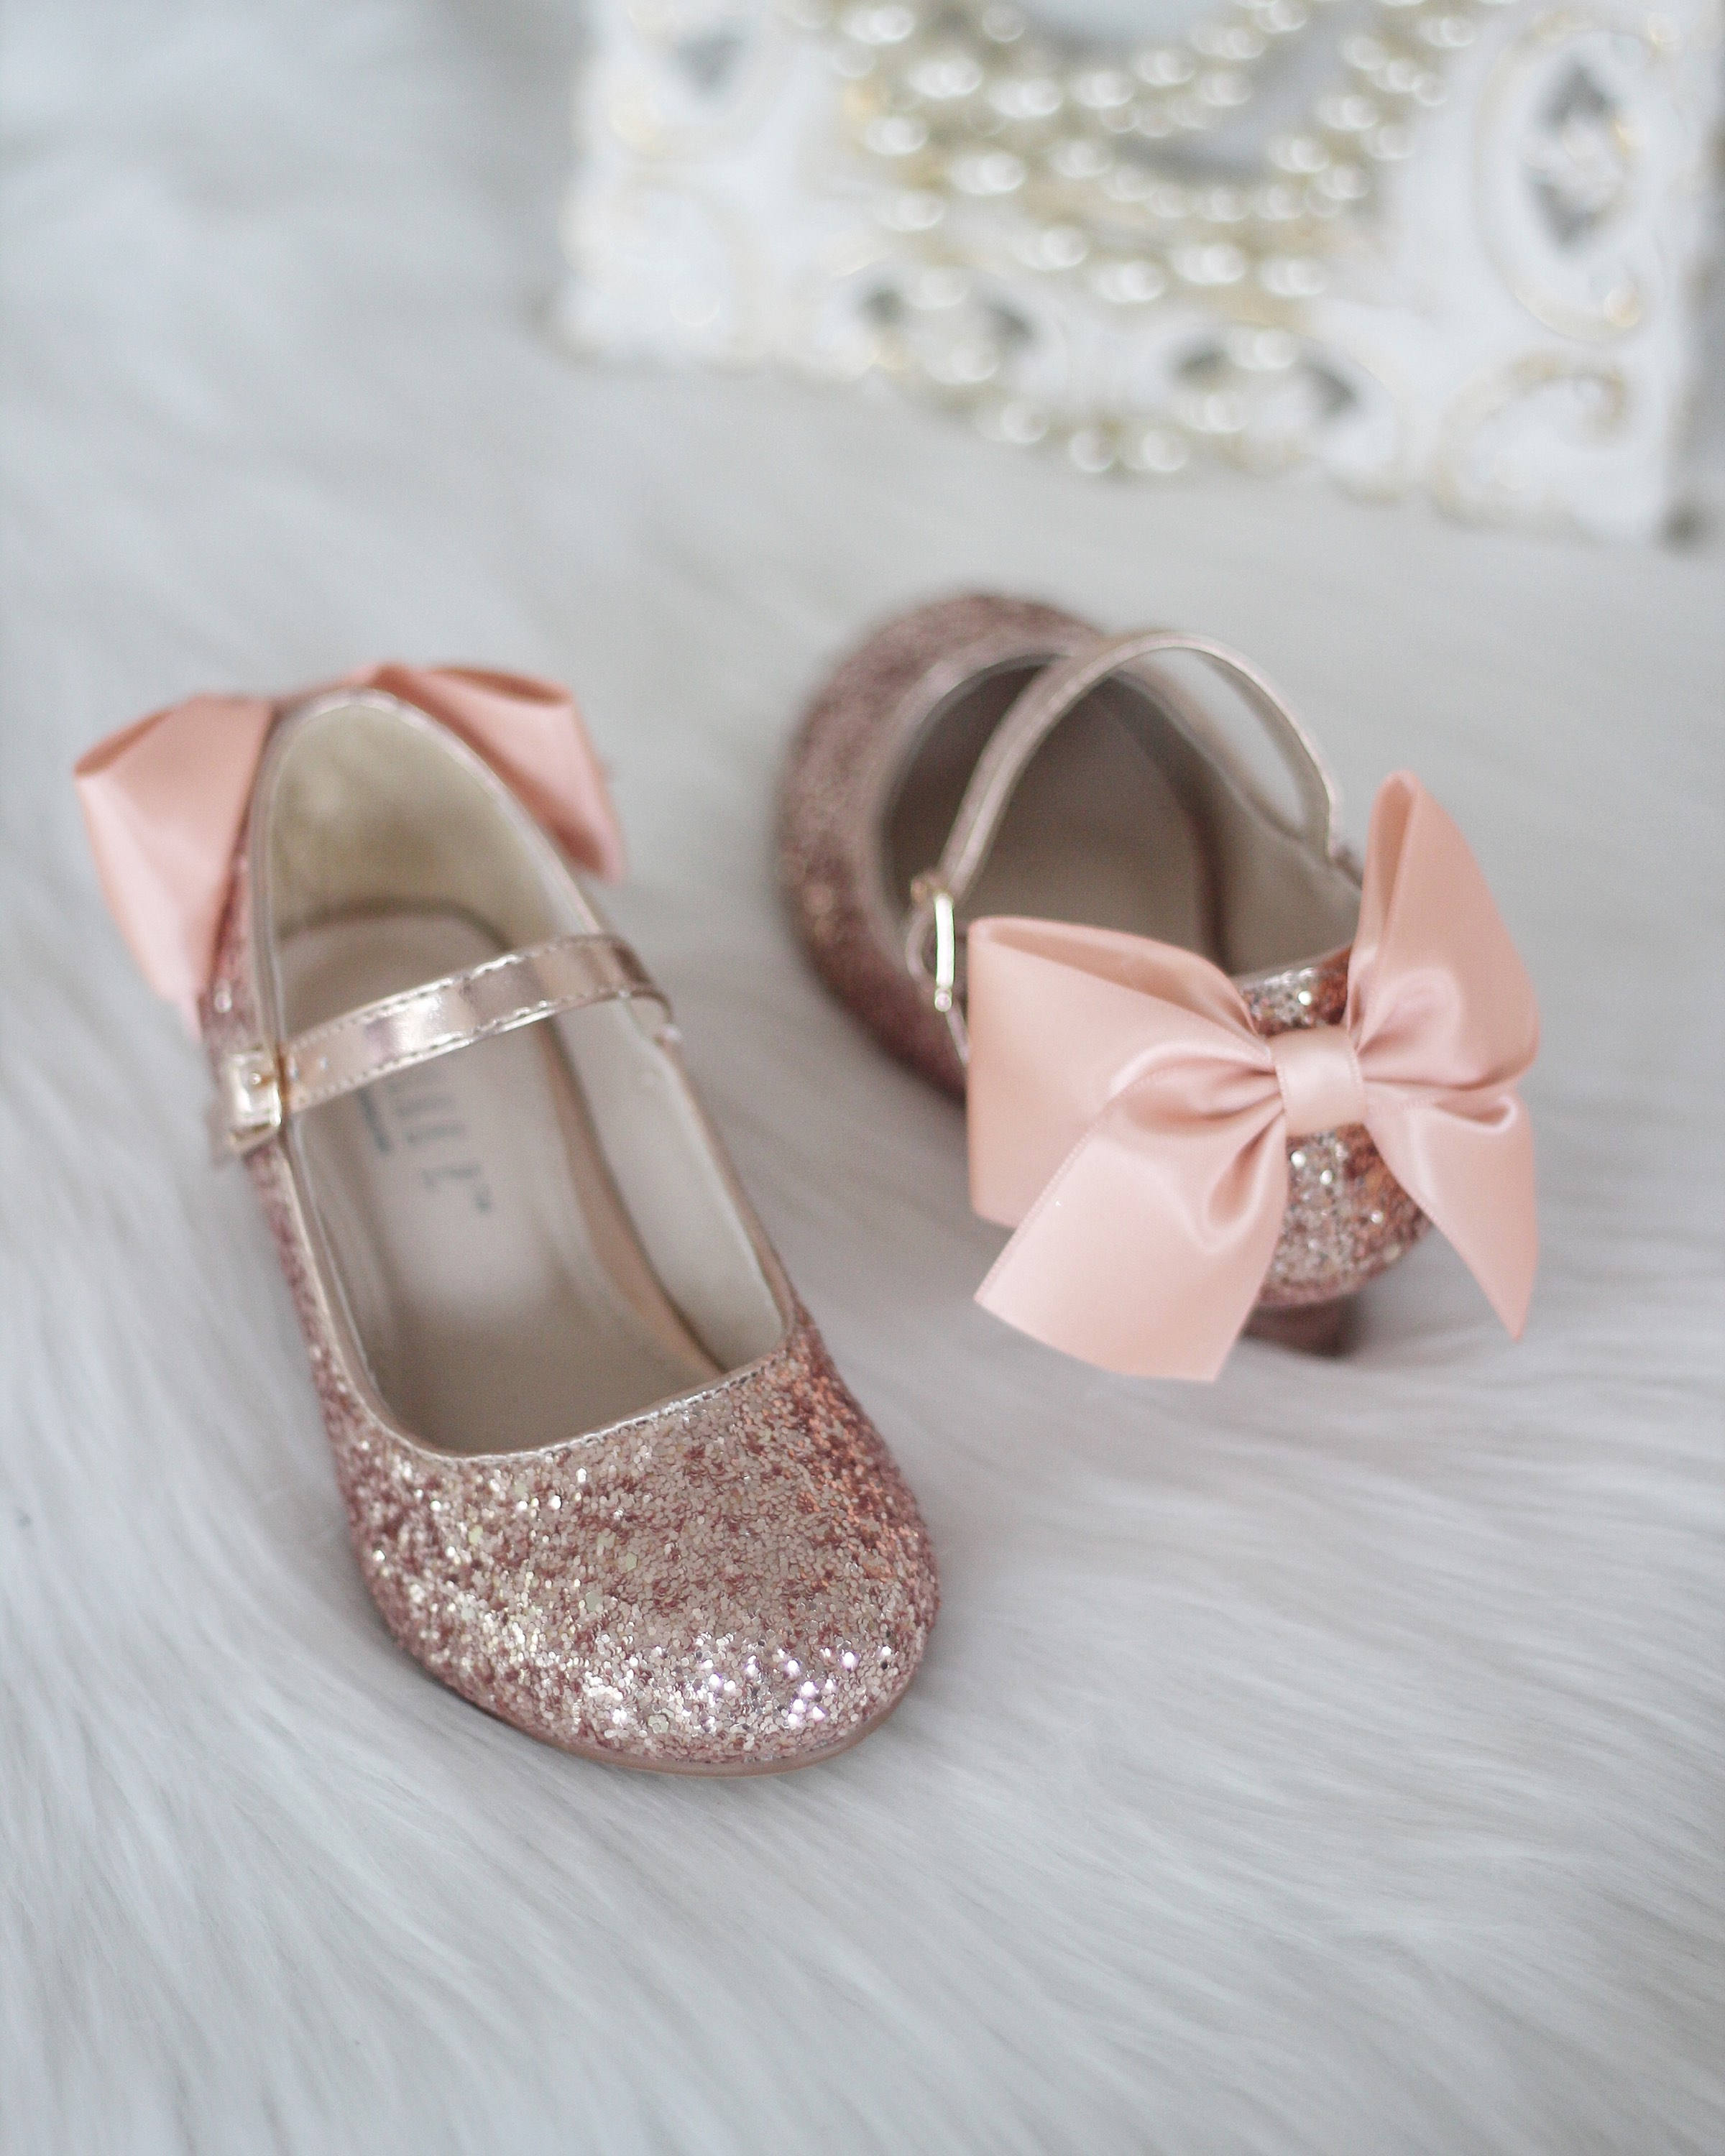 cute flower girl shoes